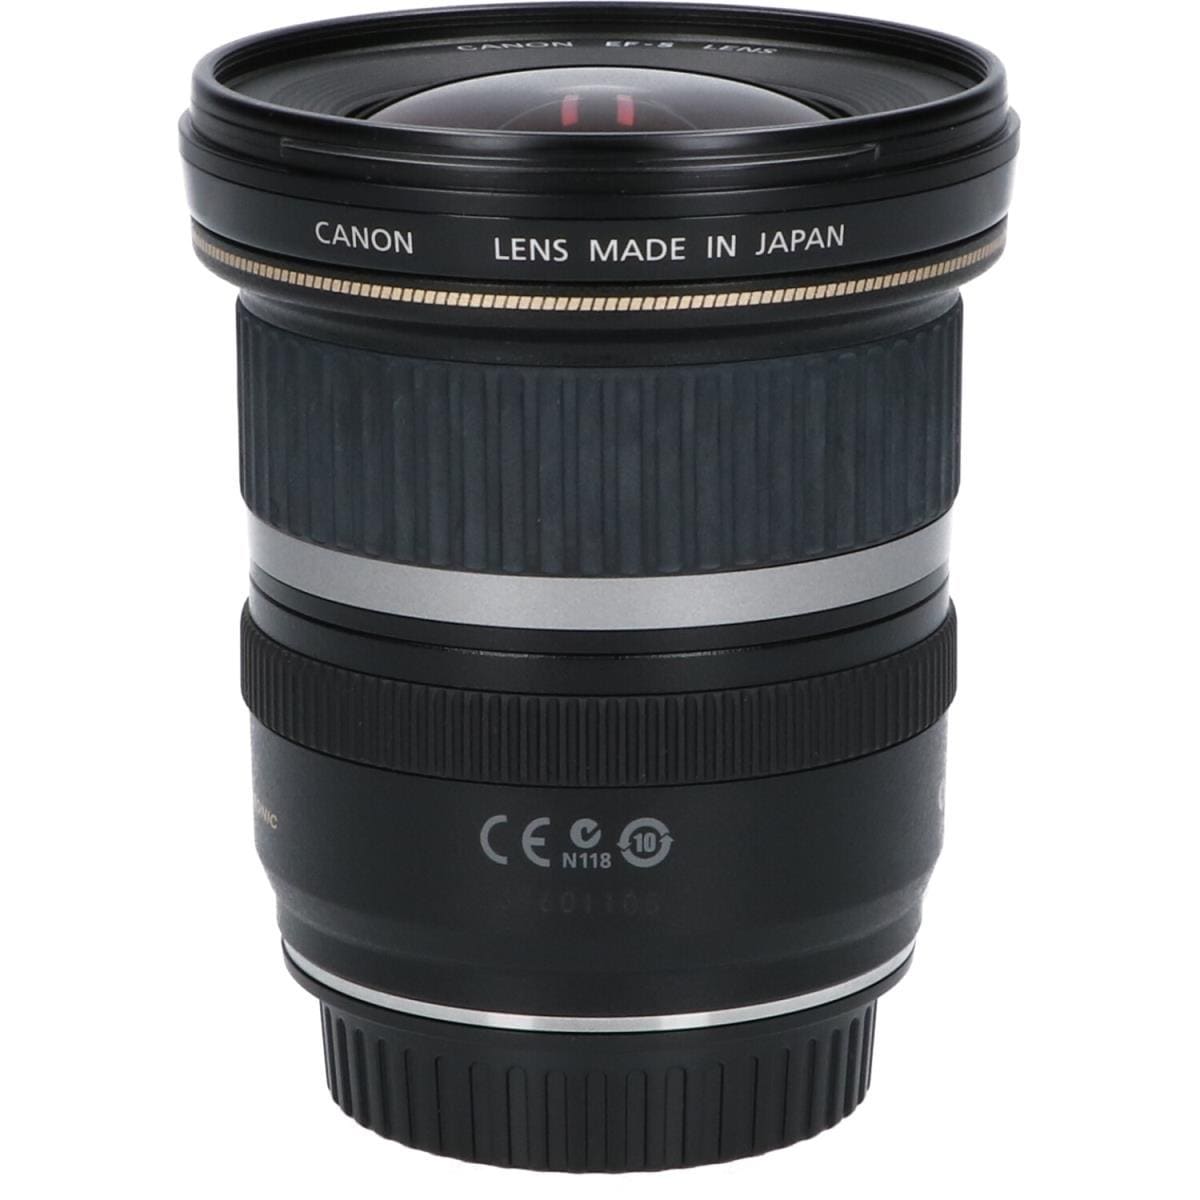 KOMEHYO|CANON EF-S10-22mm F3.5-4.5USM|Canon|Camera|Interchangeable